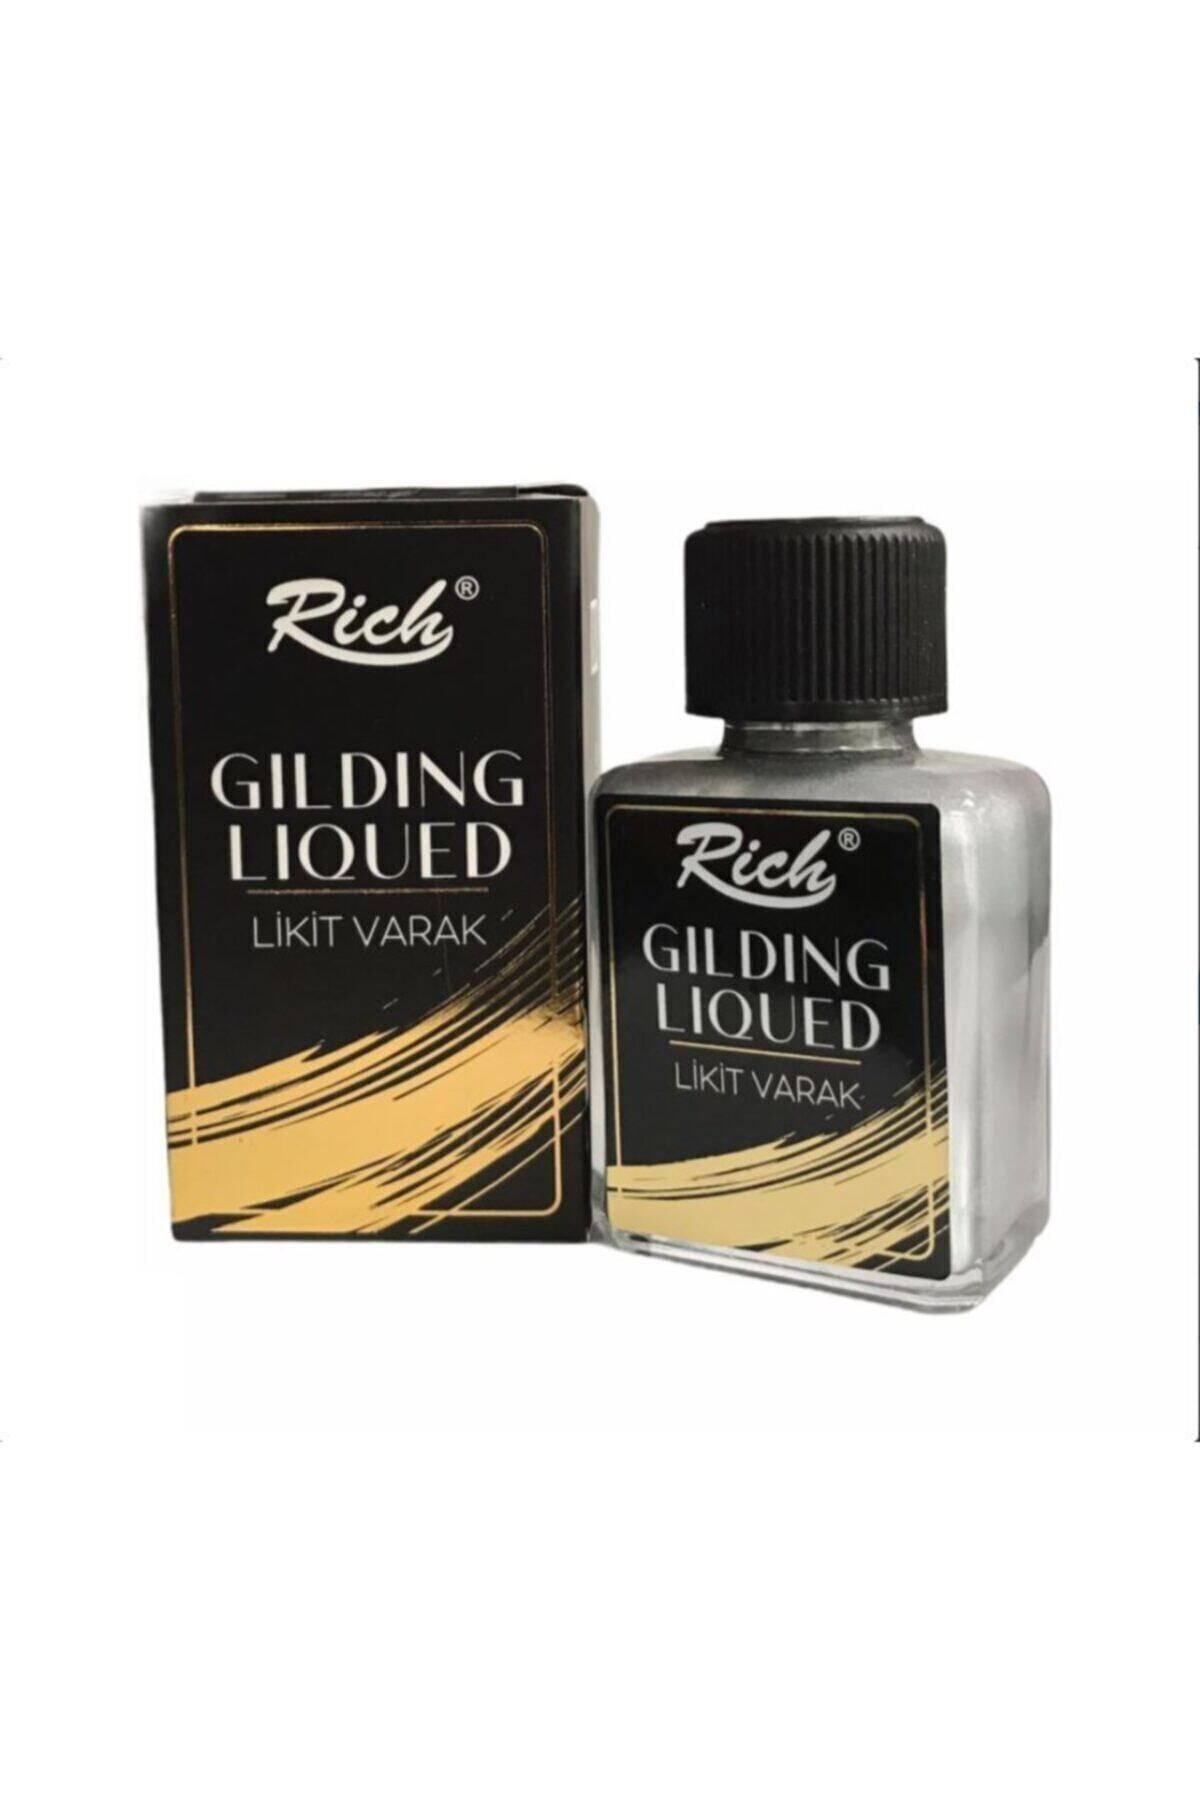 Rich Gümüş Likit Varak ( Gilding Liqued ) 75cc ( Yeni Ürün )